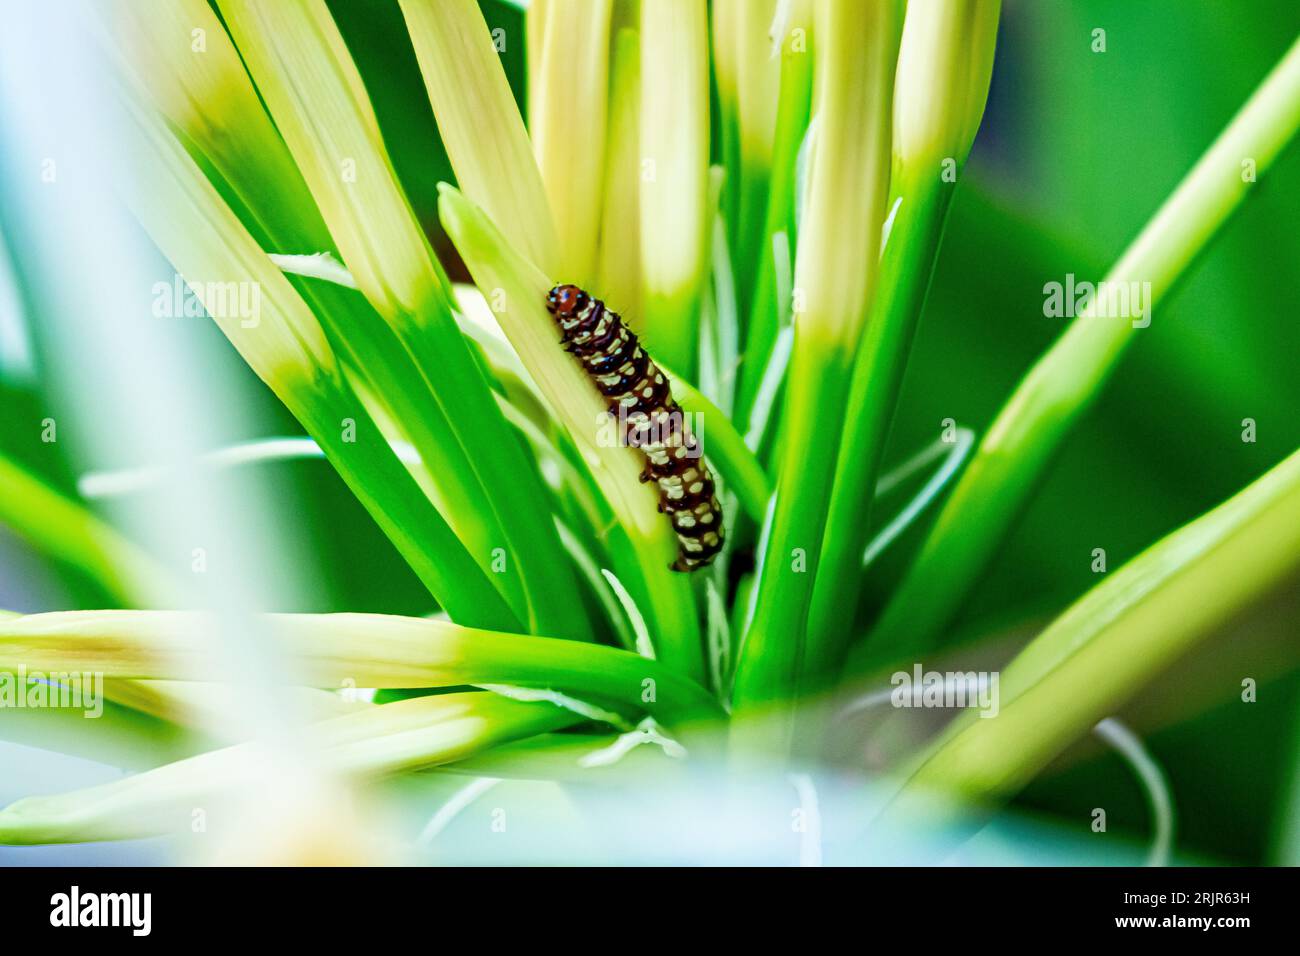 A close-up shot of Brithys crini, amaryllis borer larva on a green plant stem. Stock Photo